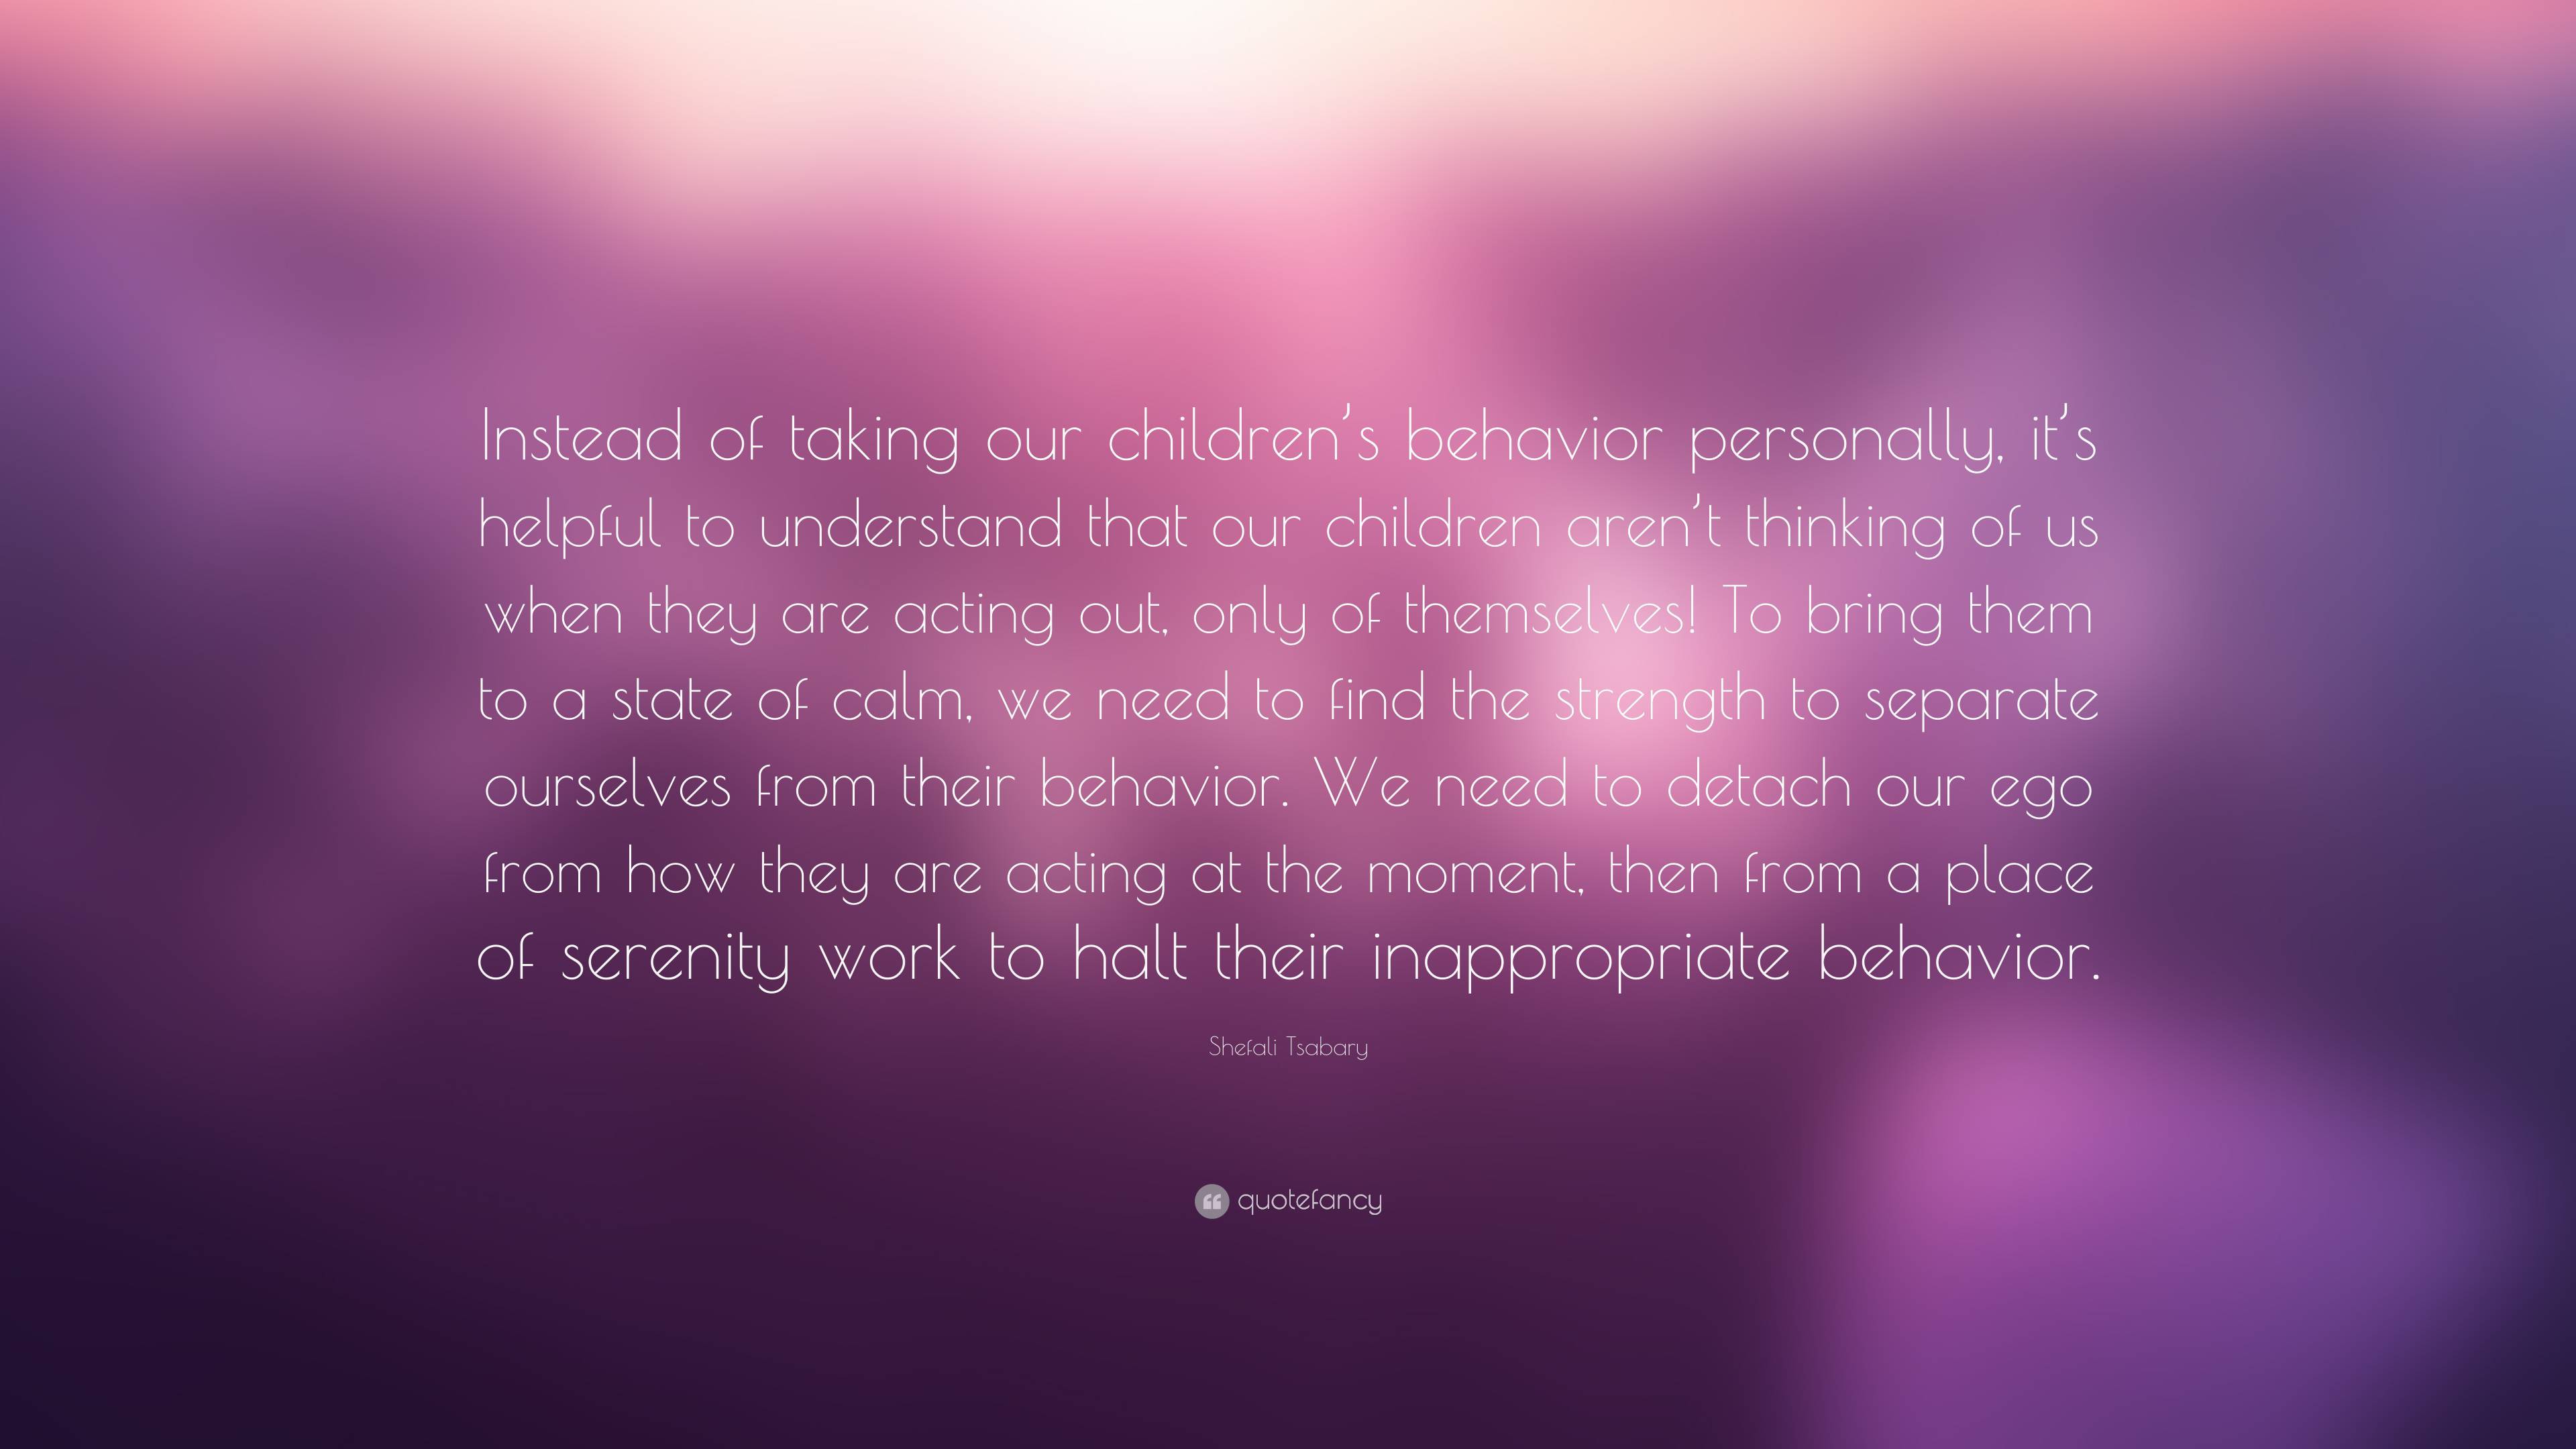 Shefali Tsabary Quote: “Instead of taking our children’s behavior ...